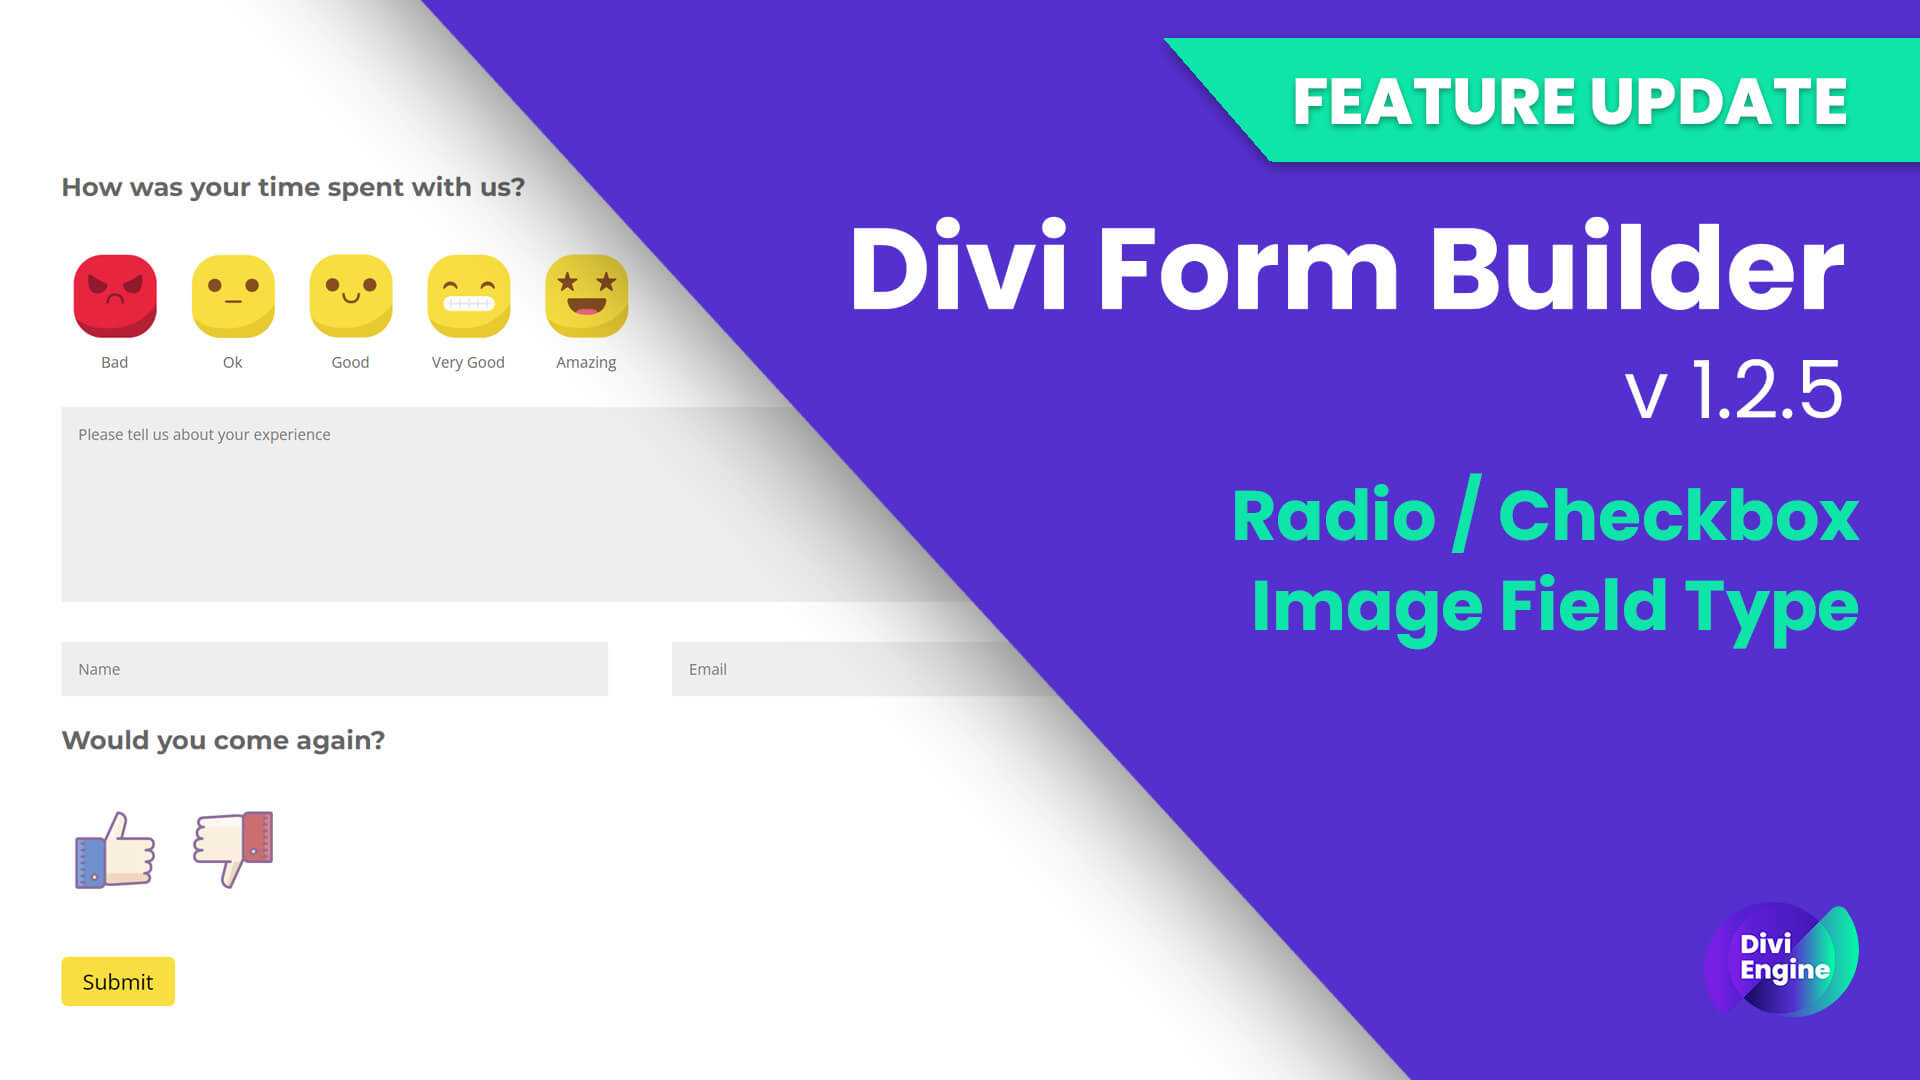 Feature Update: Divi Form Builder gets radio & checkbox image field types!